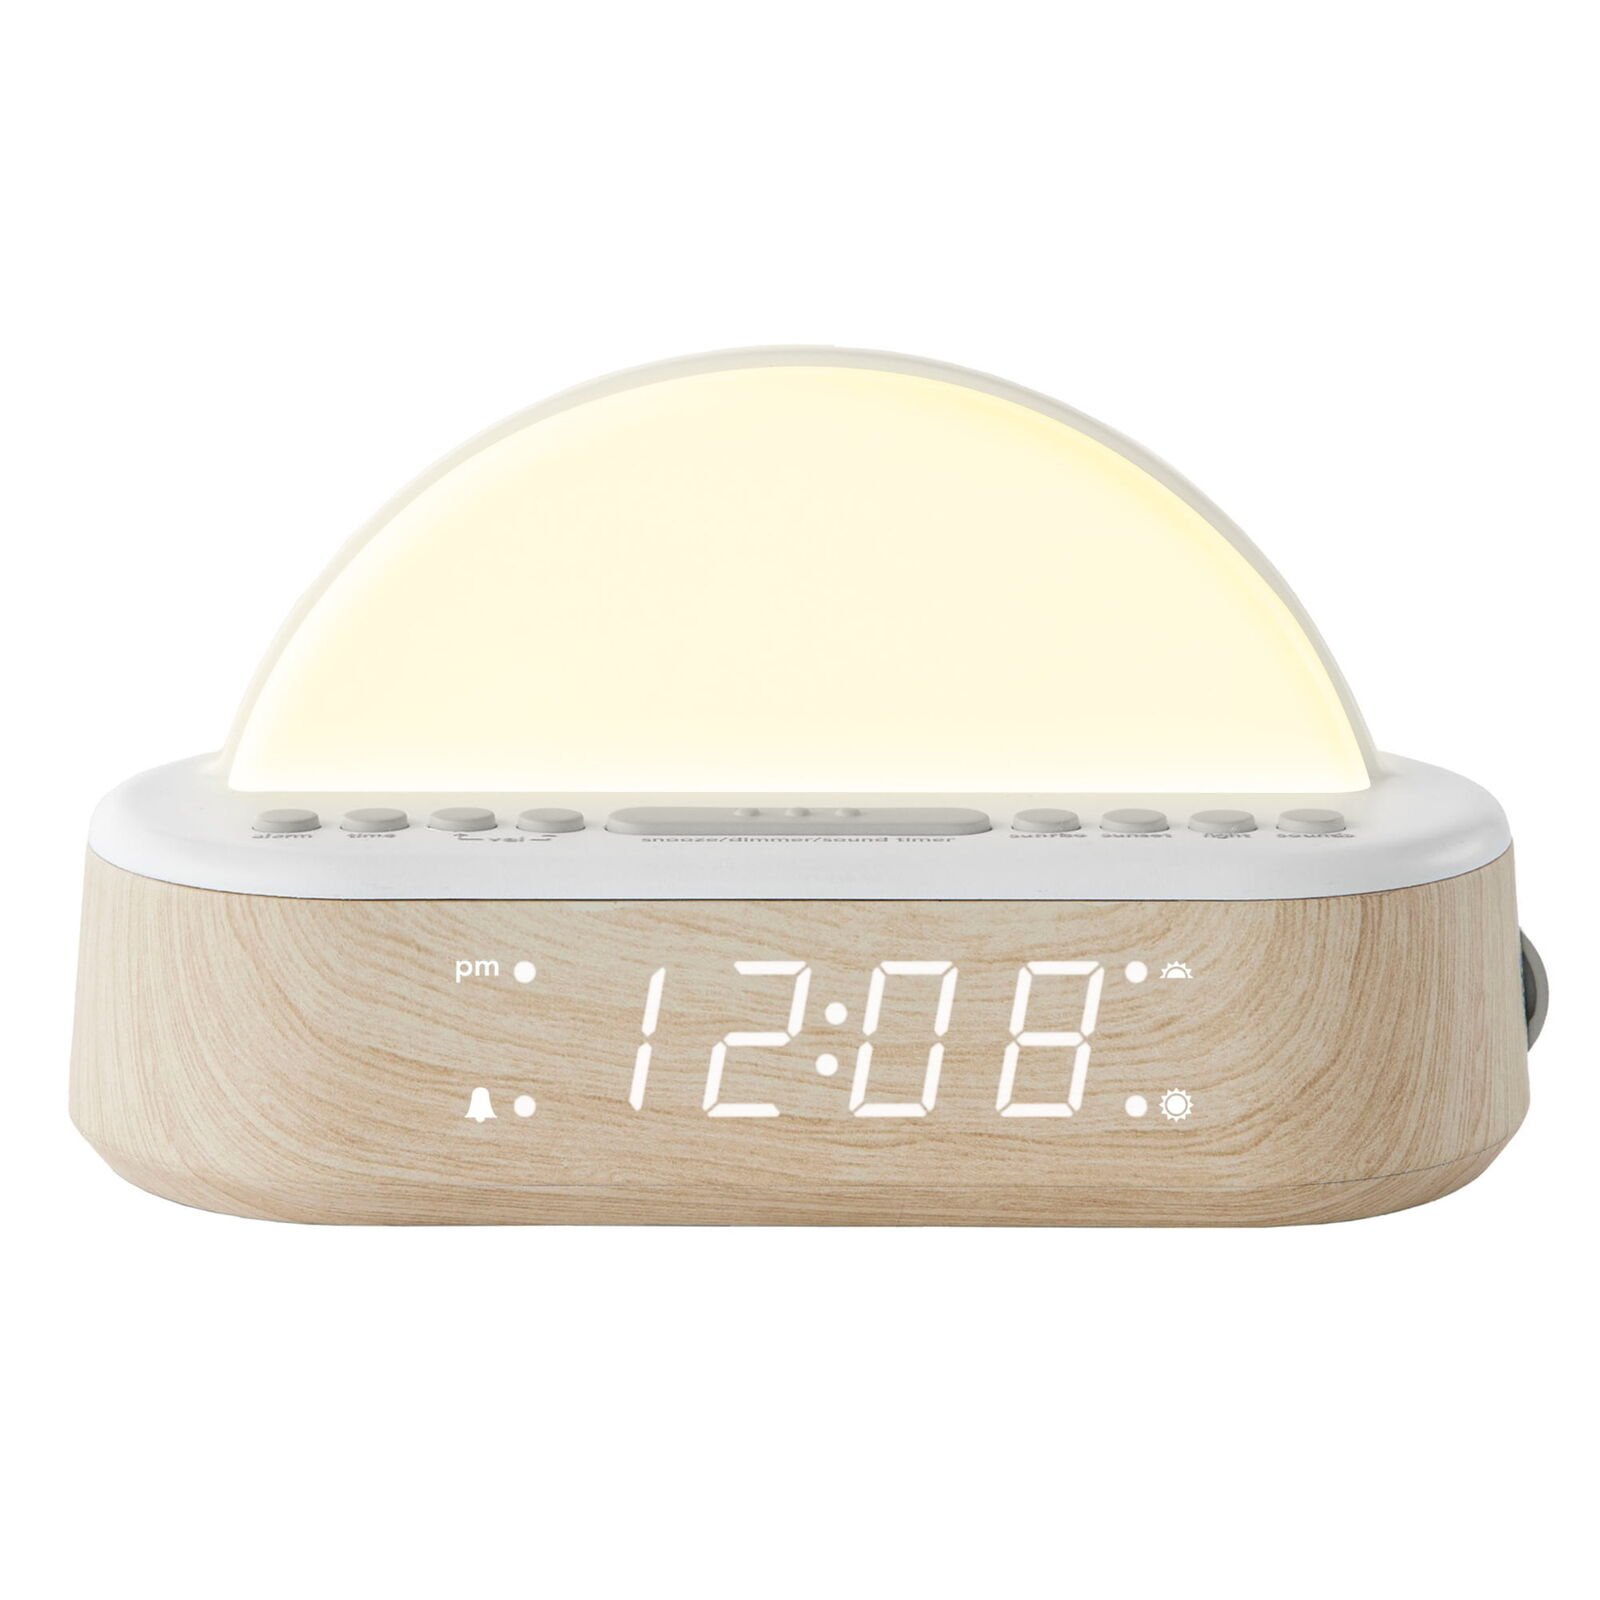 Better Homes & Gardens Sunrise Digital Alarm Clock Multicolor Light